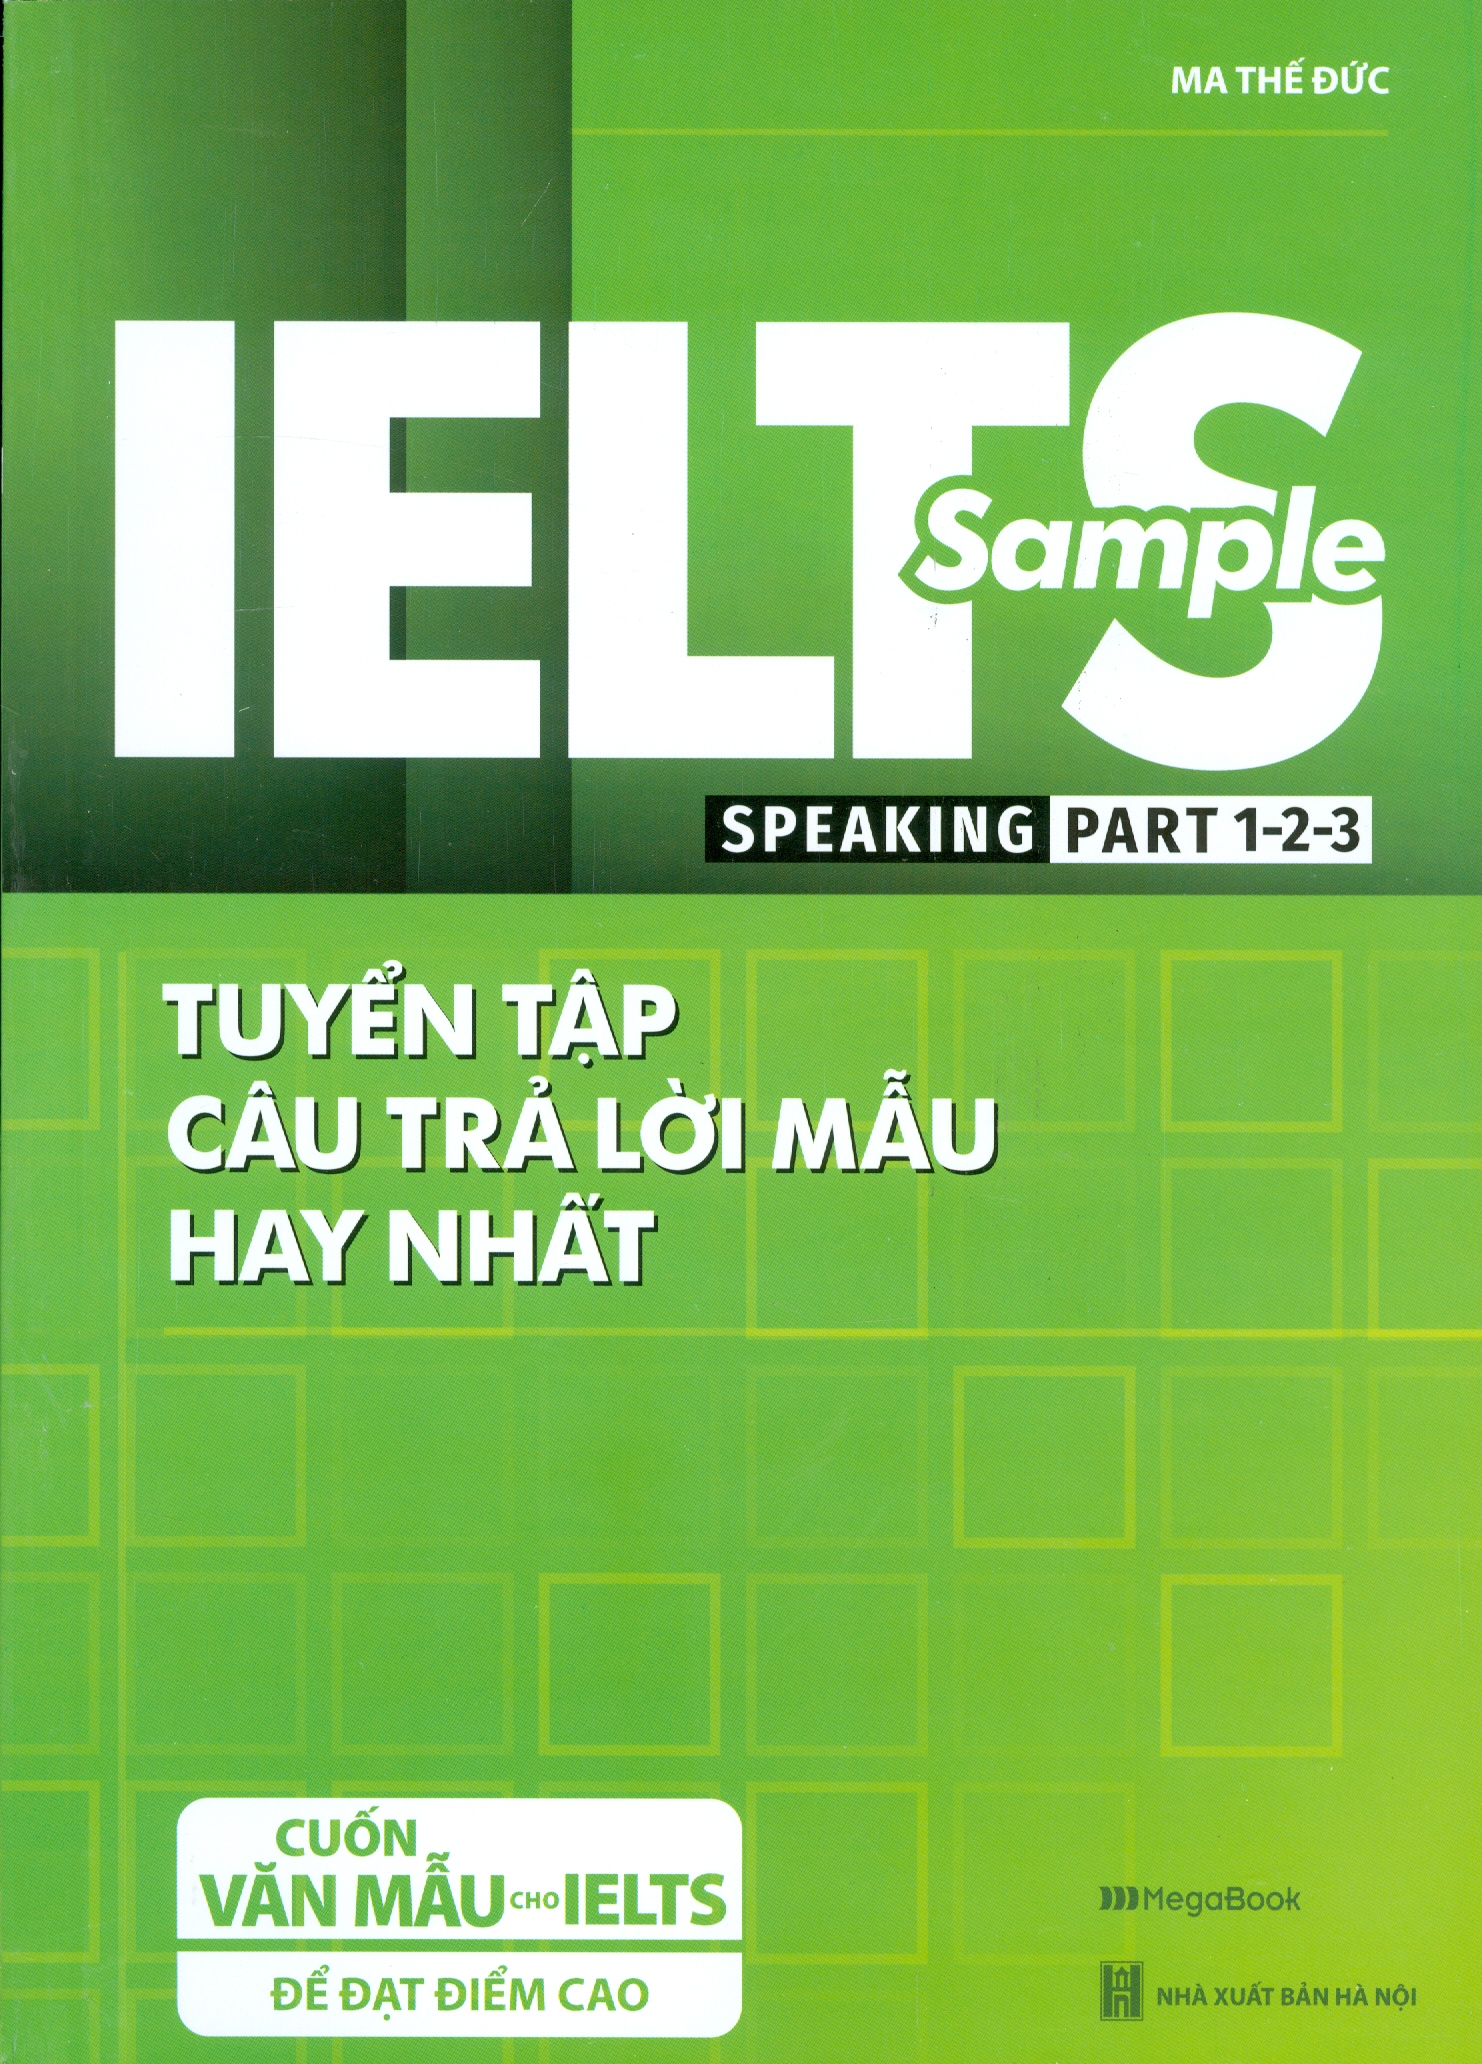 IELTS SAMPLE Speaking Part 1-2-3 Tuyển tập câu trả lời mẫu hay nhất